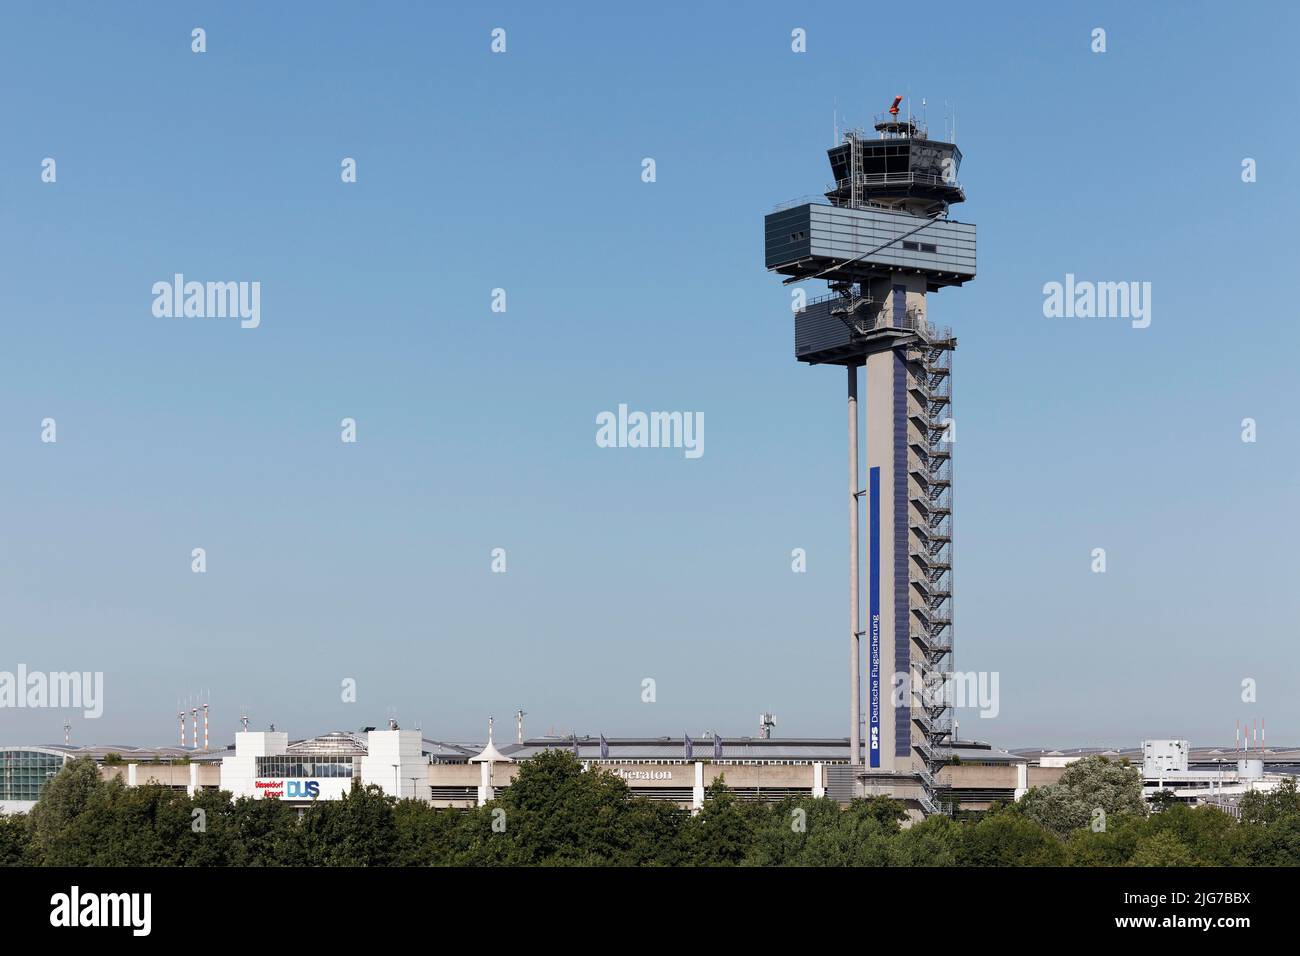 Tower against a blue sky, German Air Traffic Control, Duesseldorf Airport, North Rhine-Westphalia, Germany Stock Photo